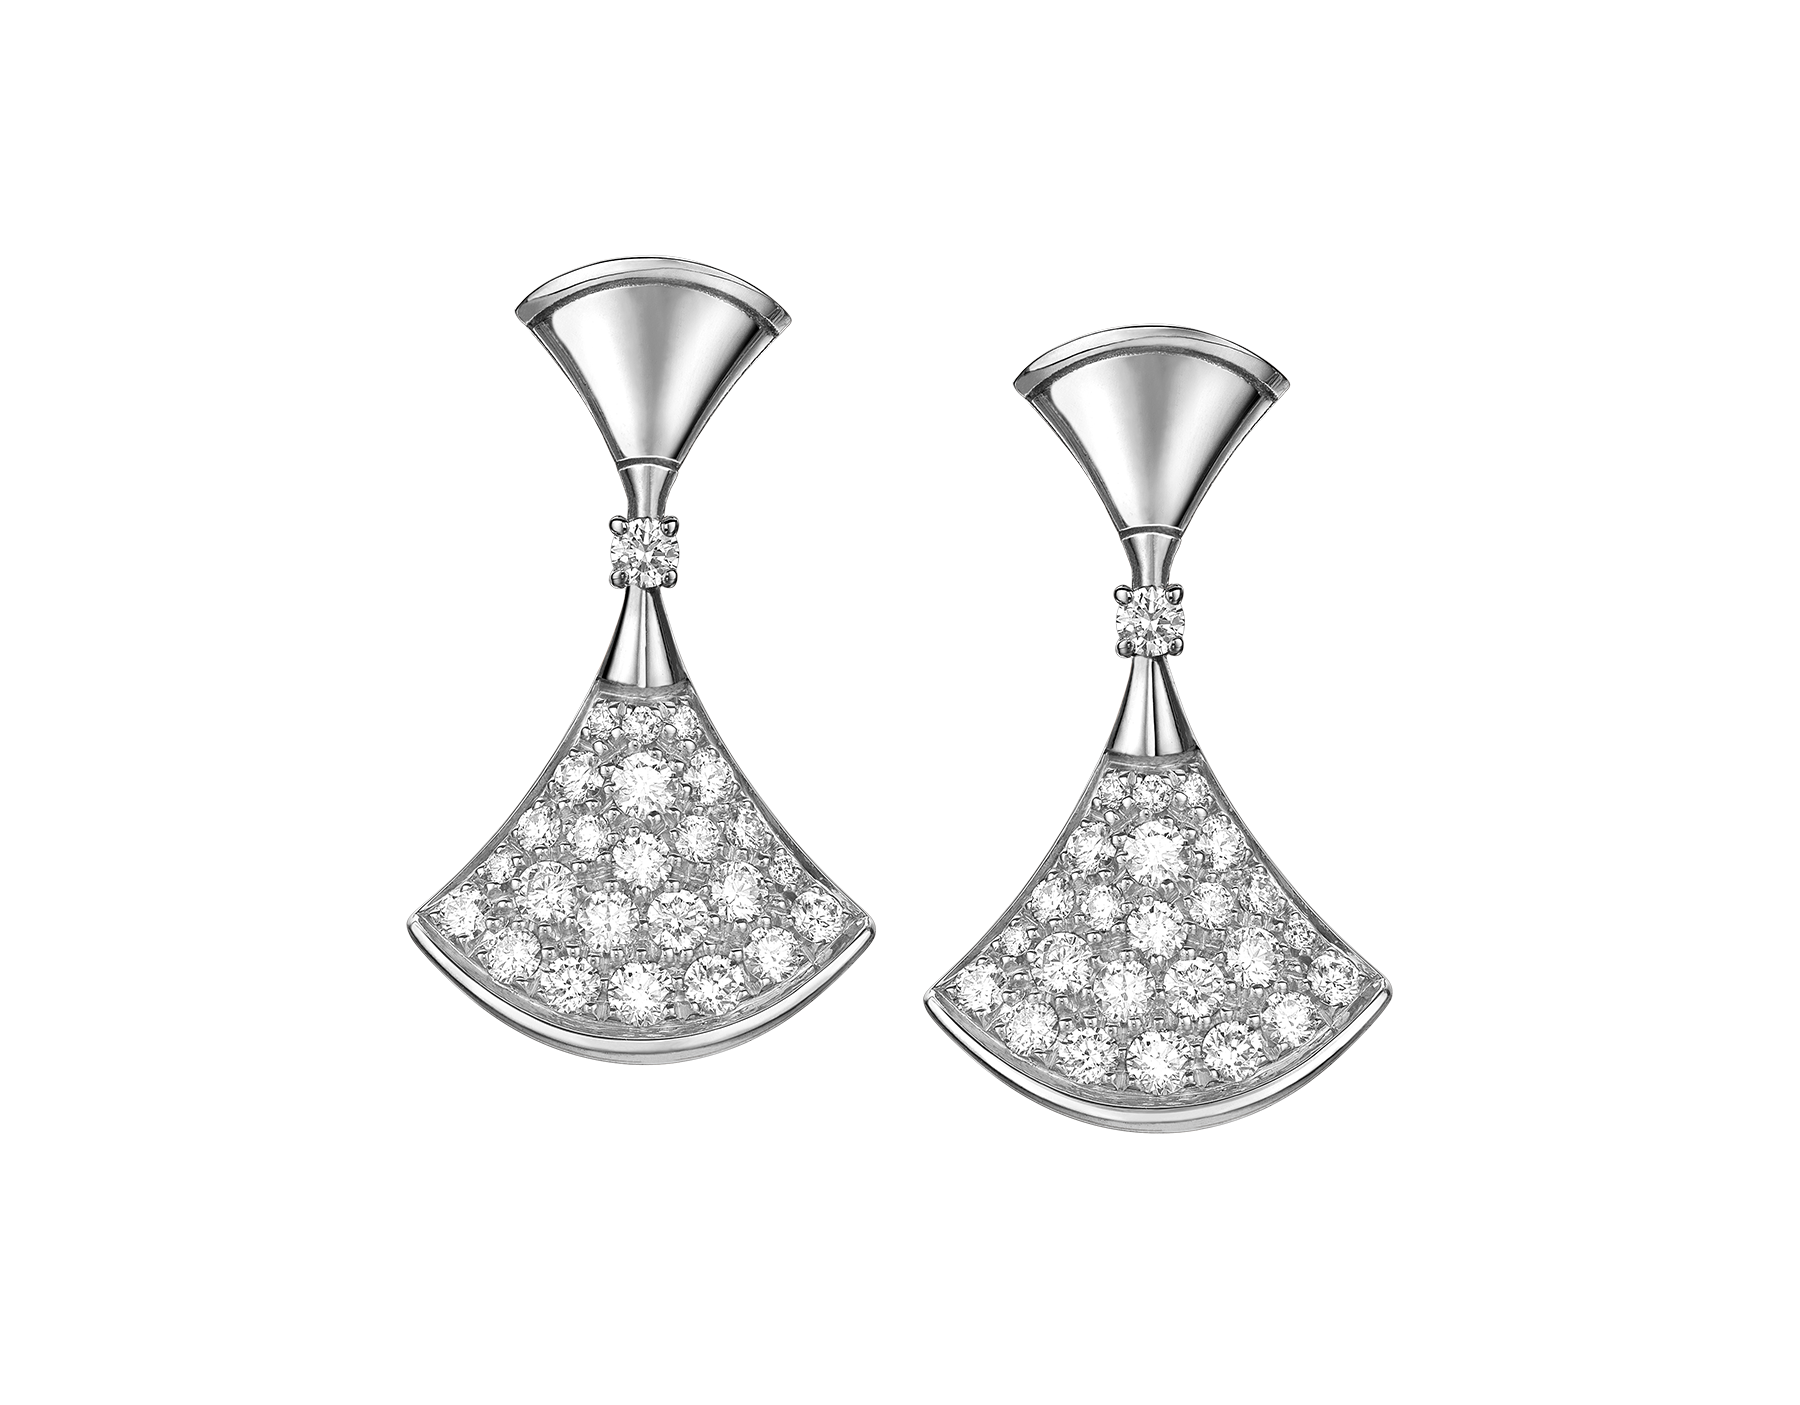 bvlgari earrings diamonds